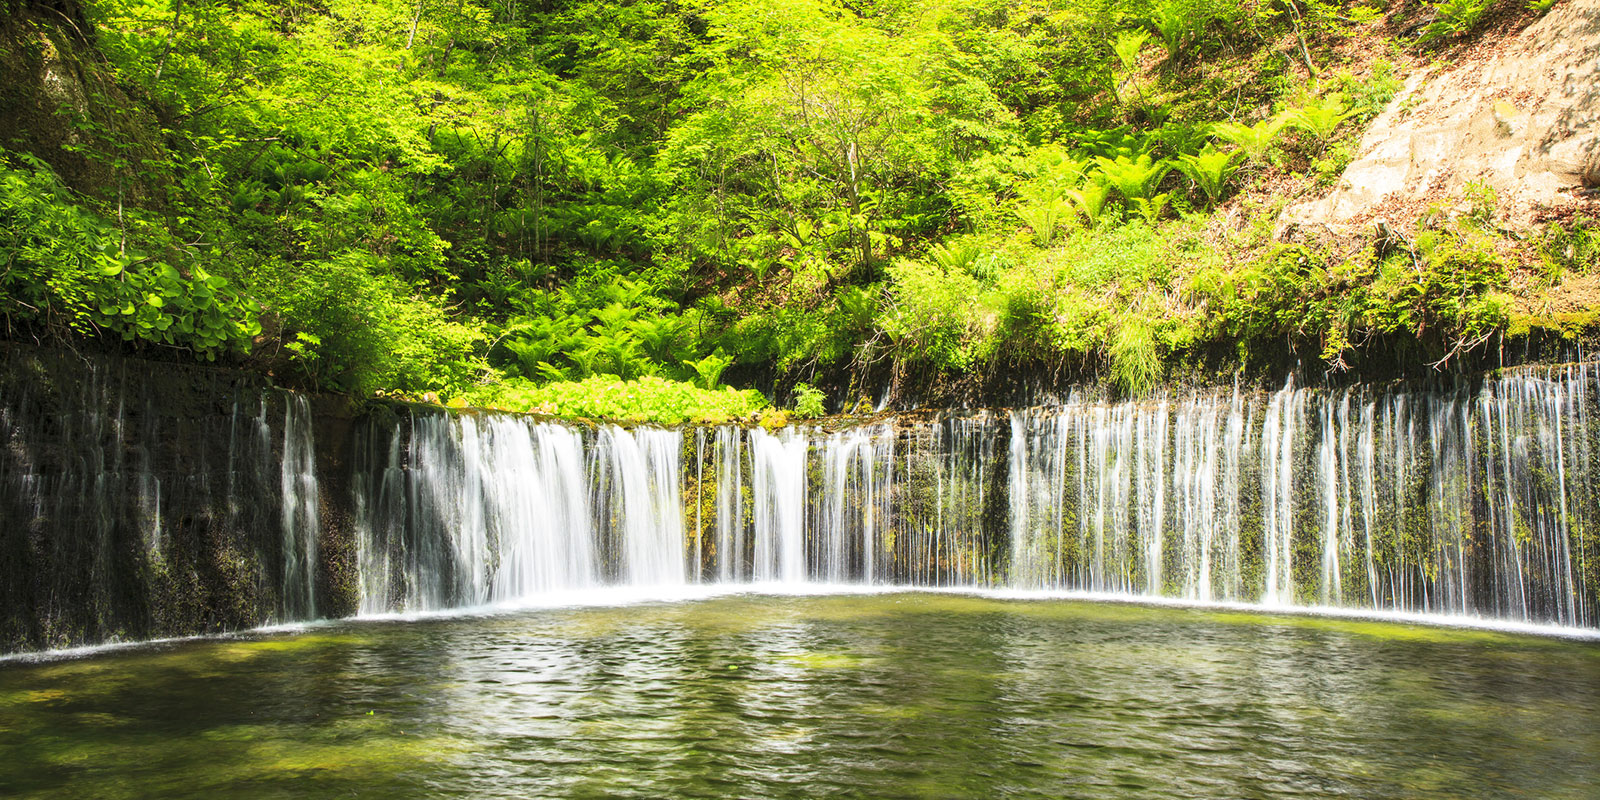 Shiraito Waterfall | Norikazu/Dreamstime